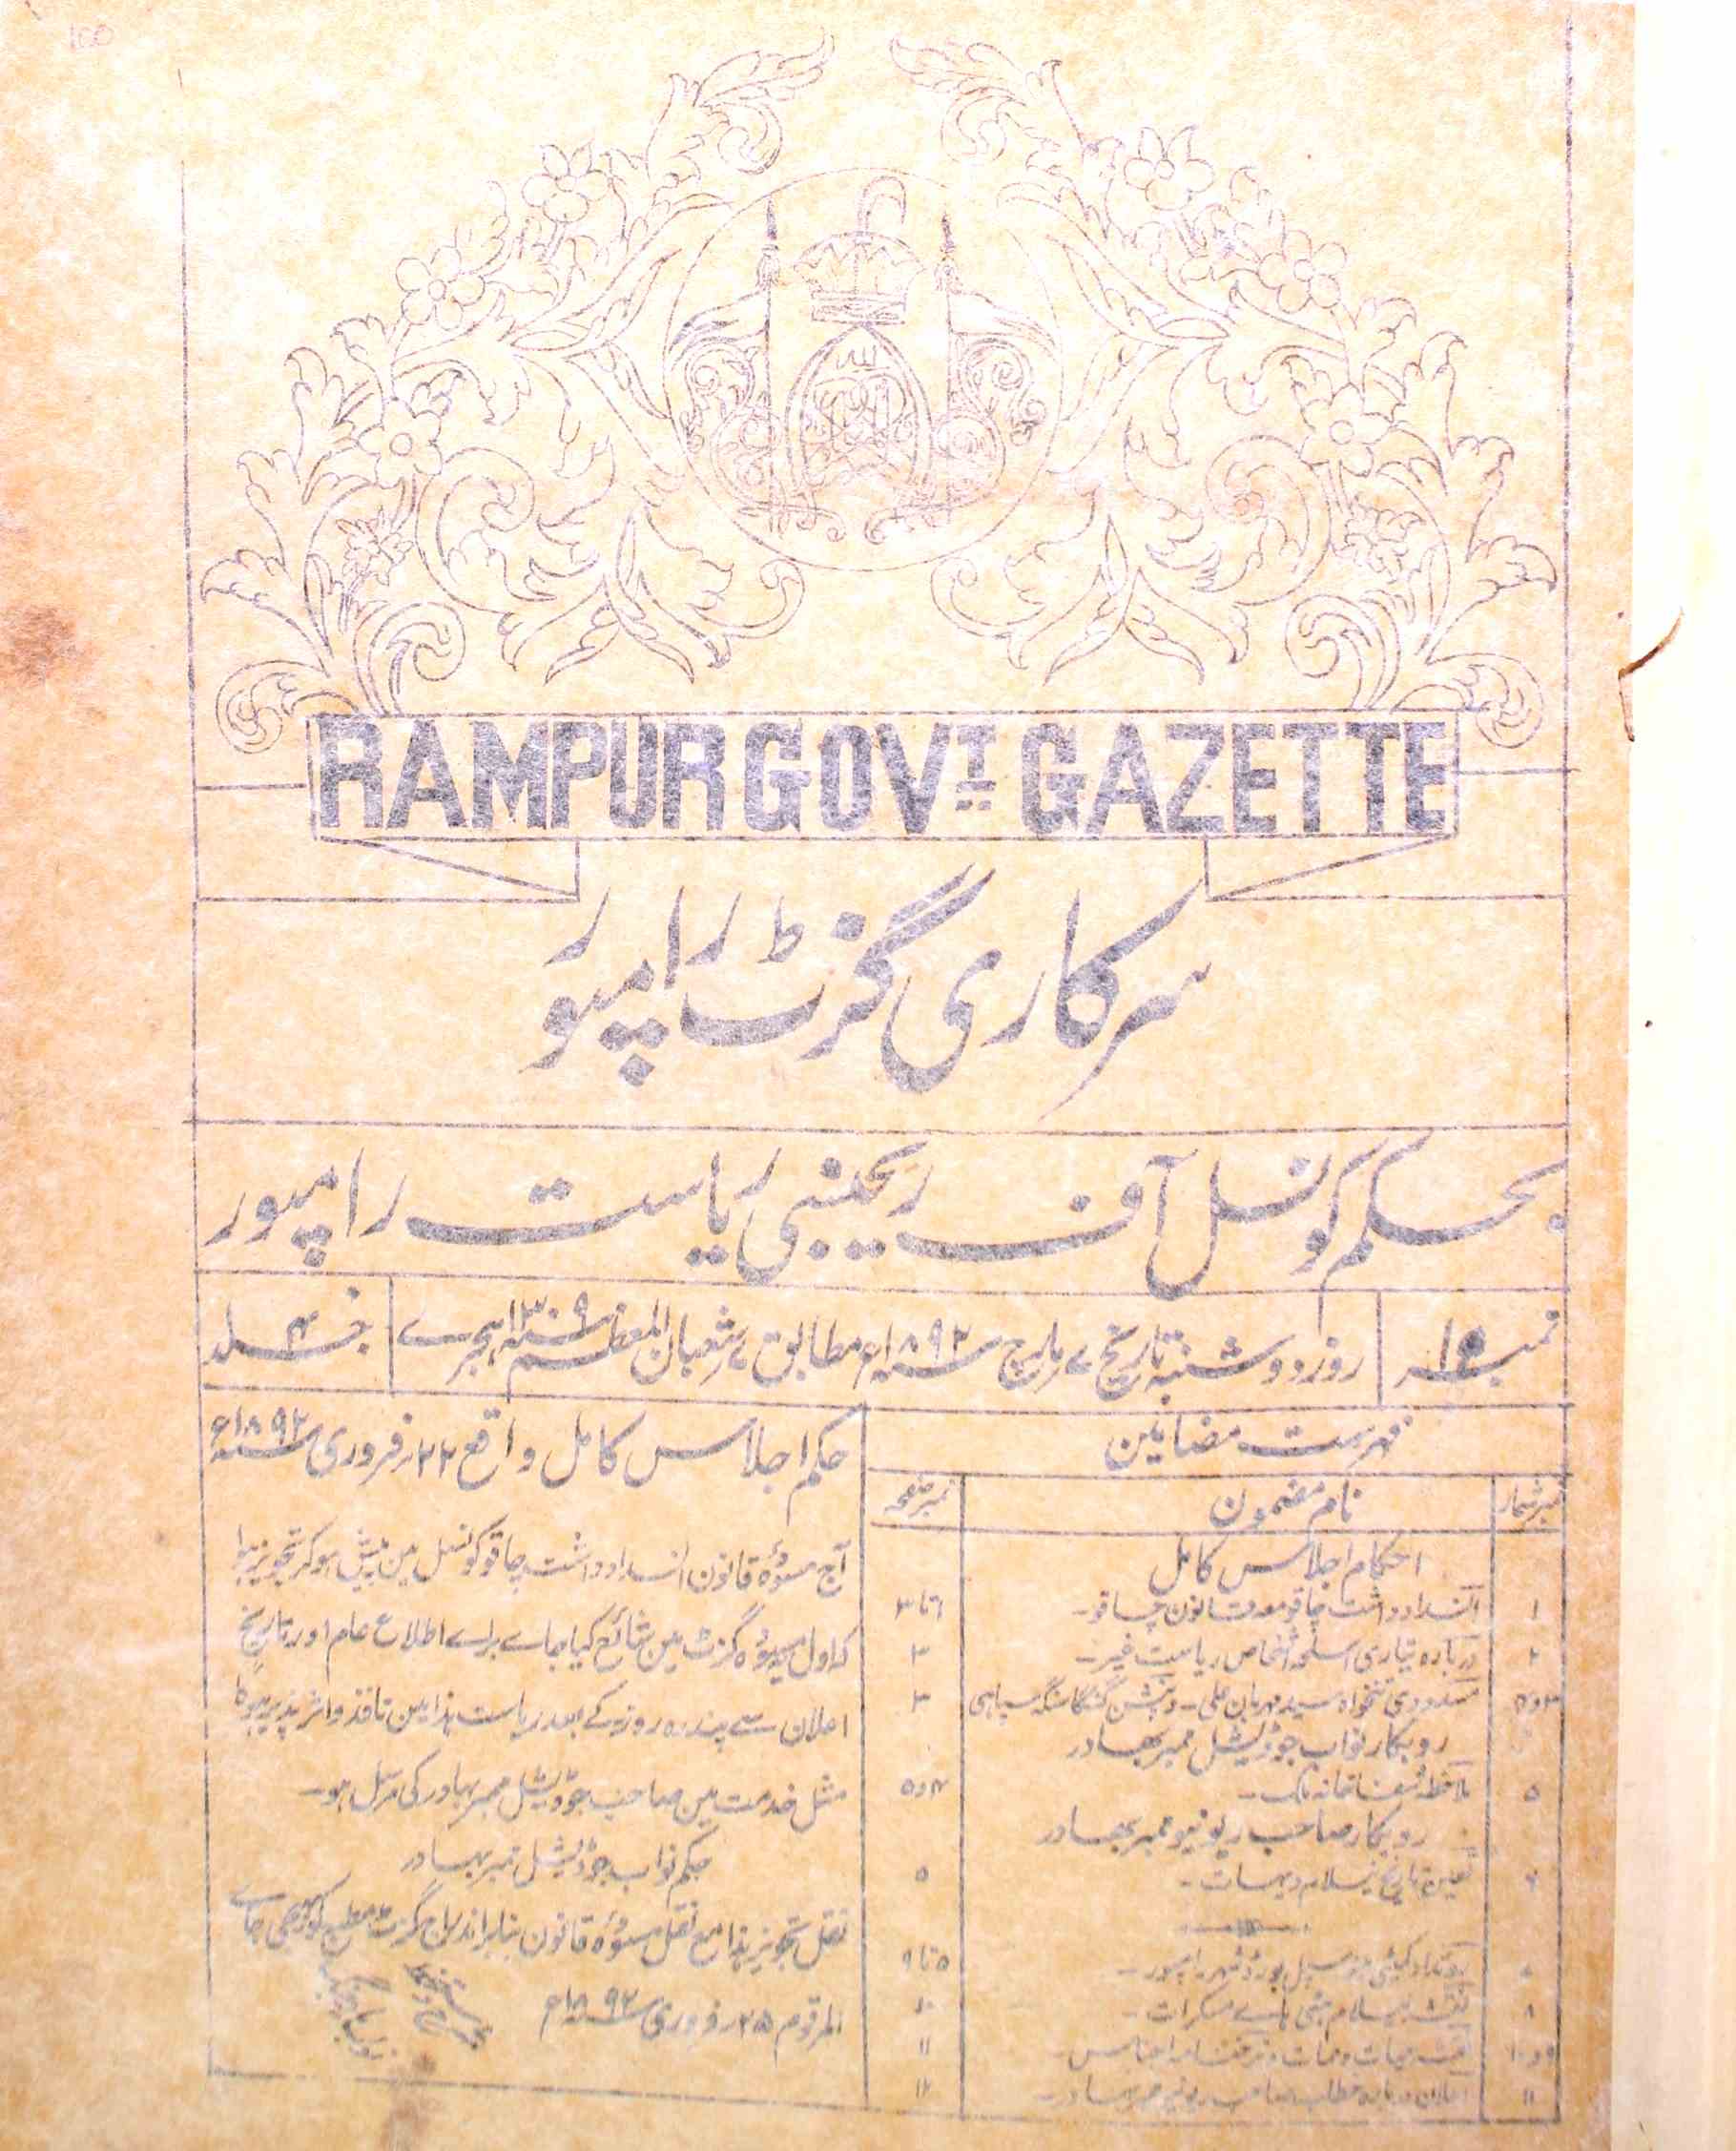 Rampur Government Gazette, Rampur